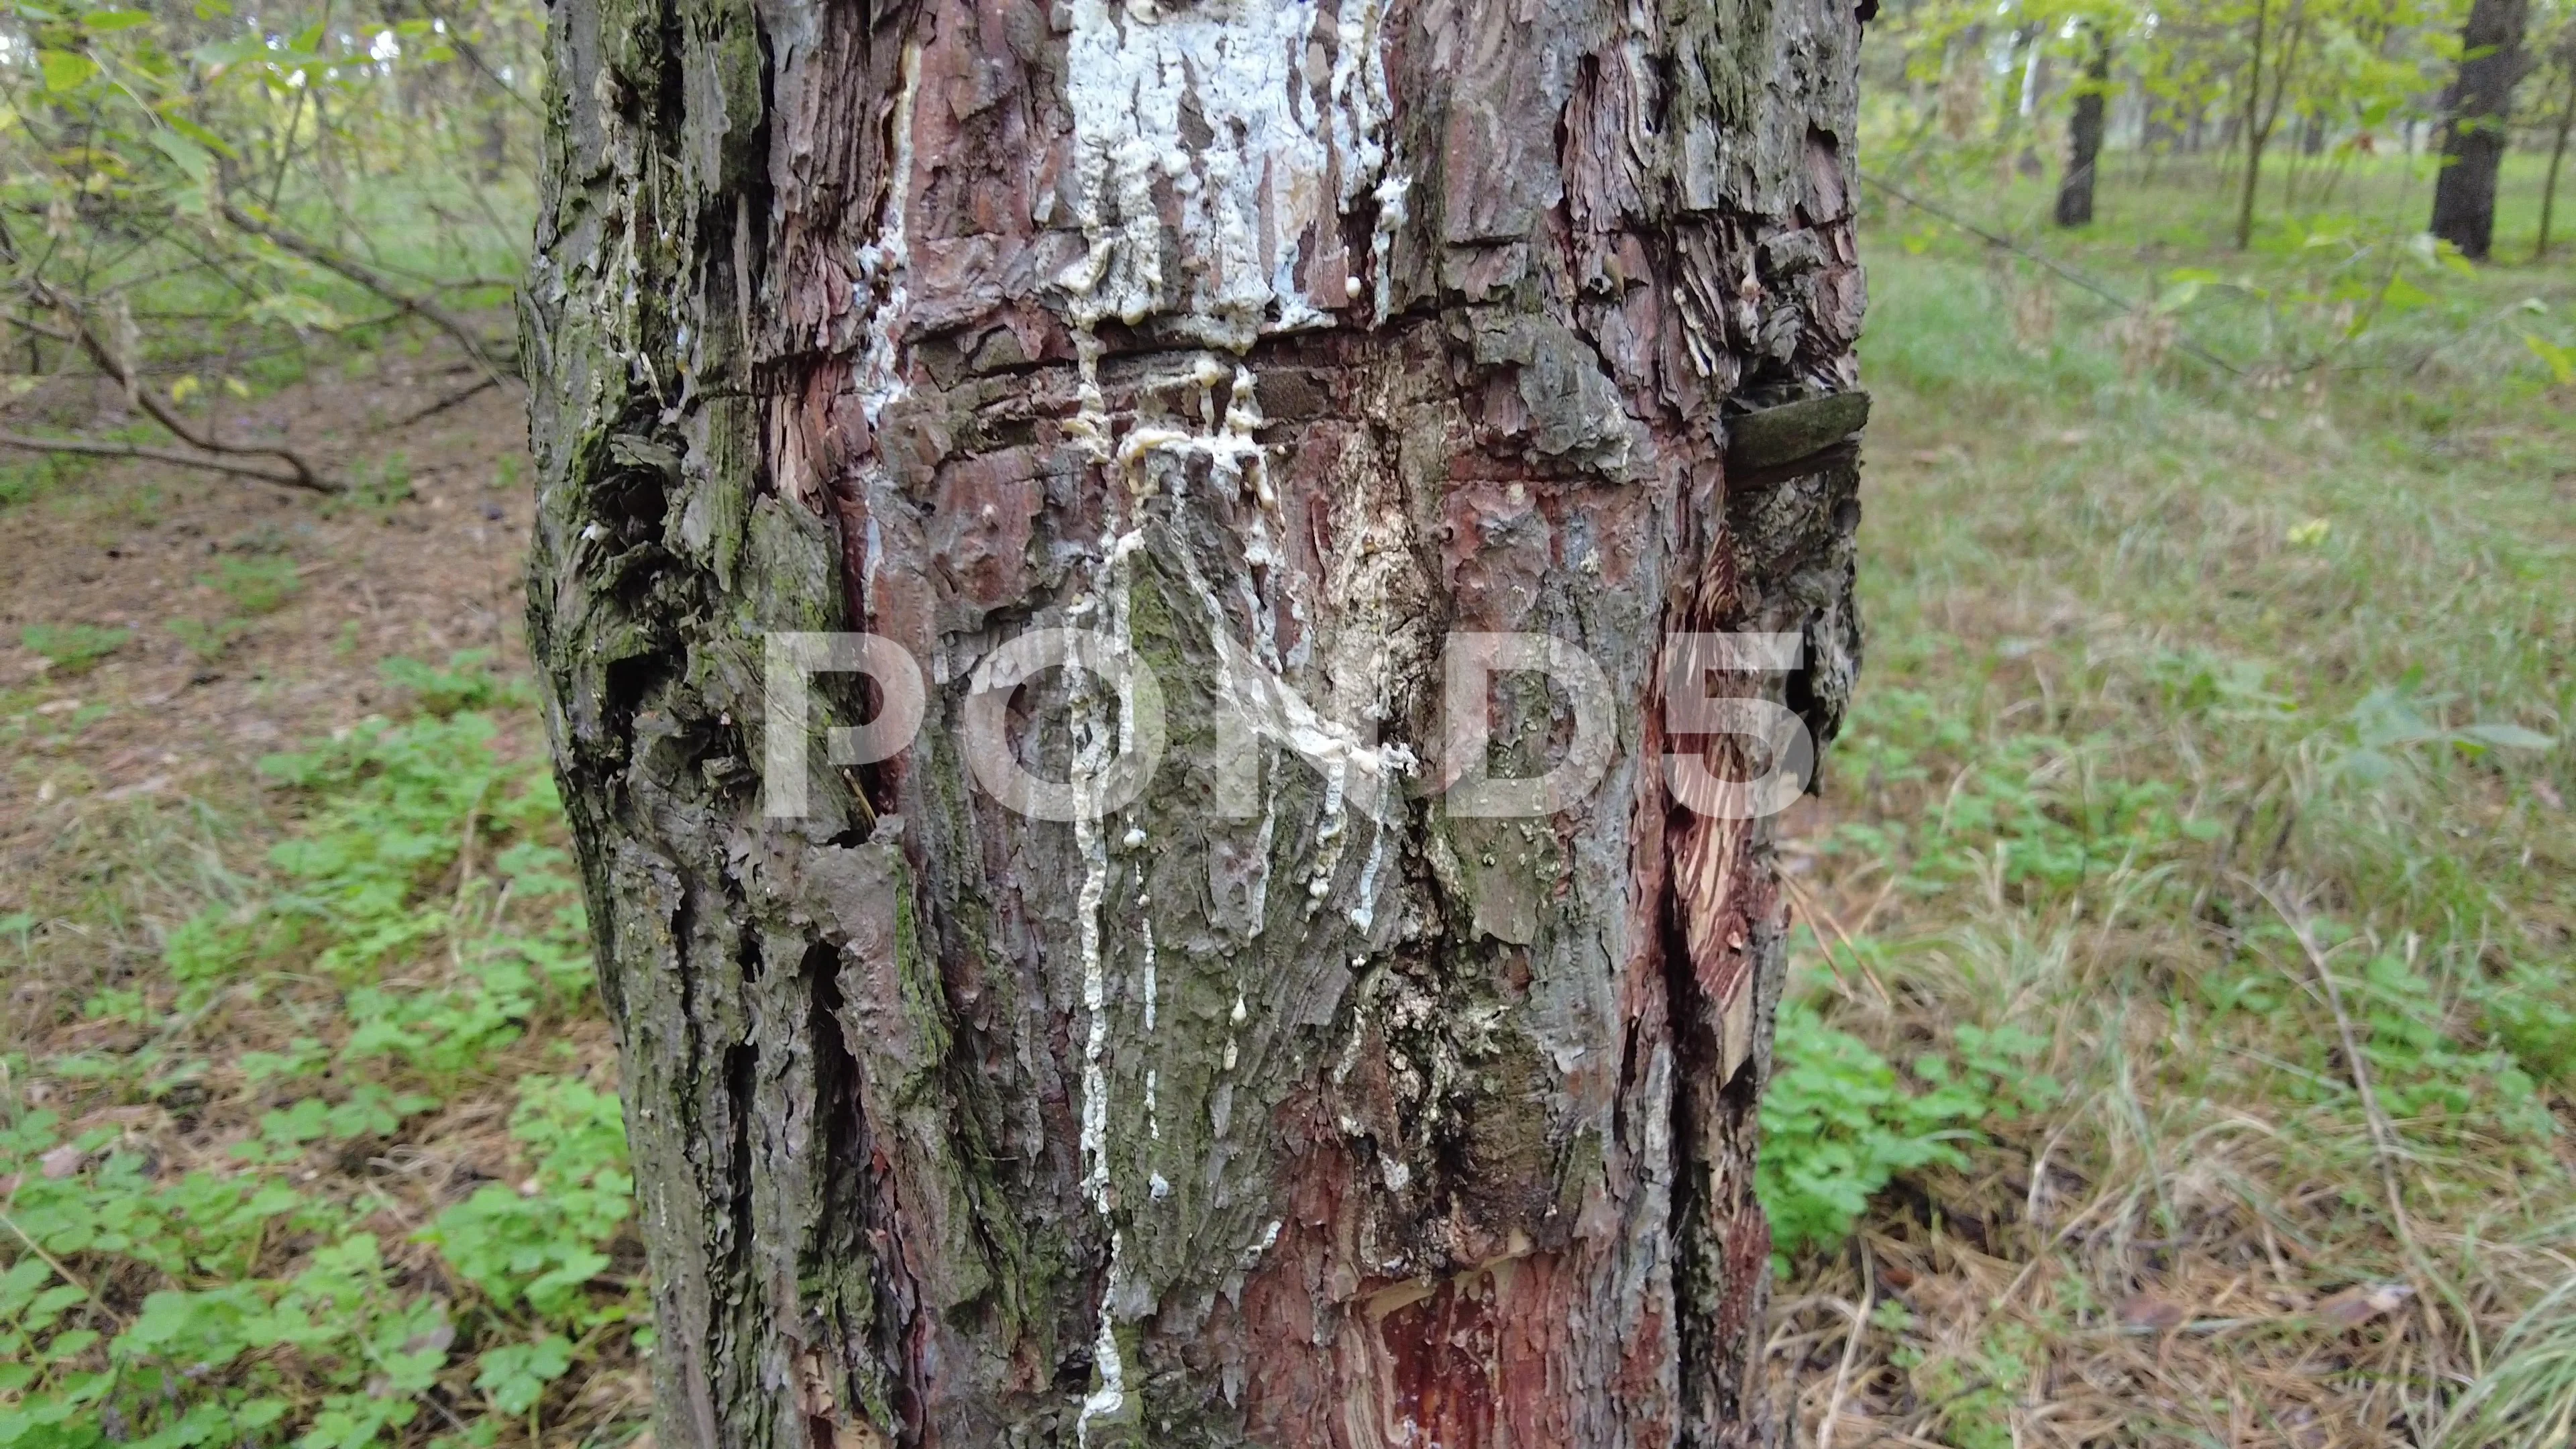 pines tree sap to get the pine resin. Stock Photo